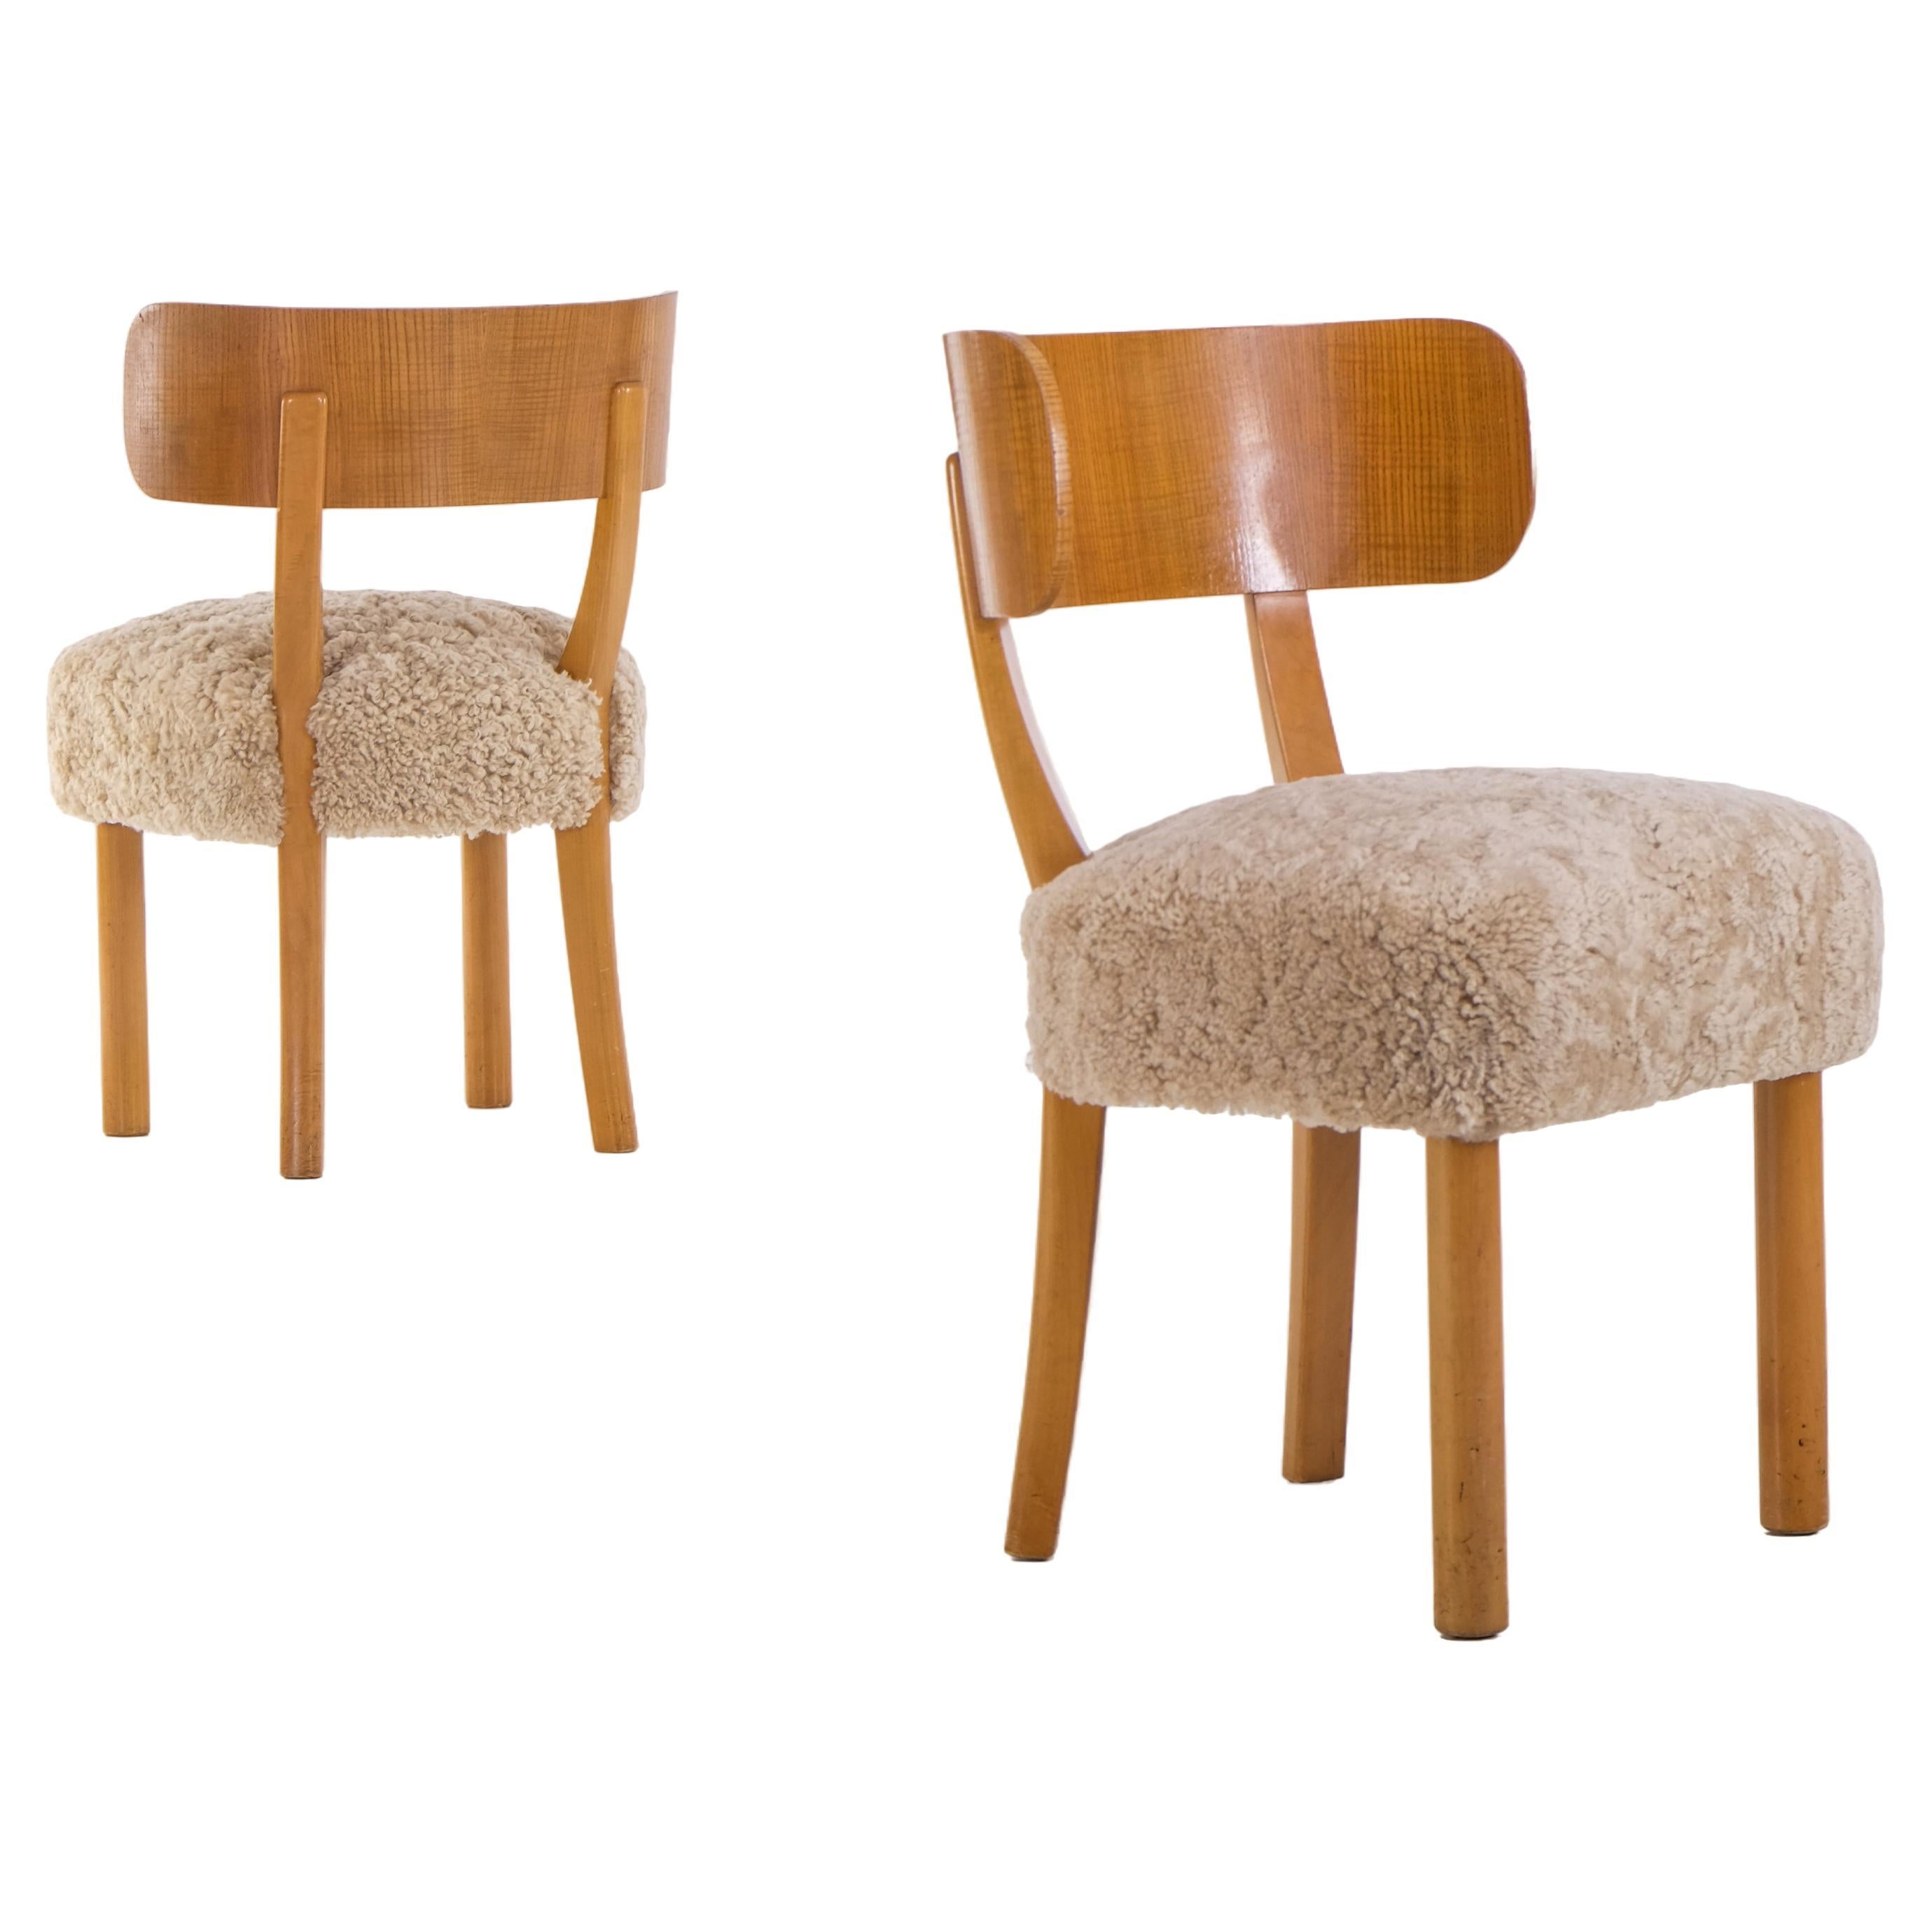 Pair of Axel-Einar Hjorth "Birka" chairs by Nordiska Kompaniet, 1930s For Sale